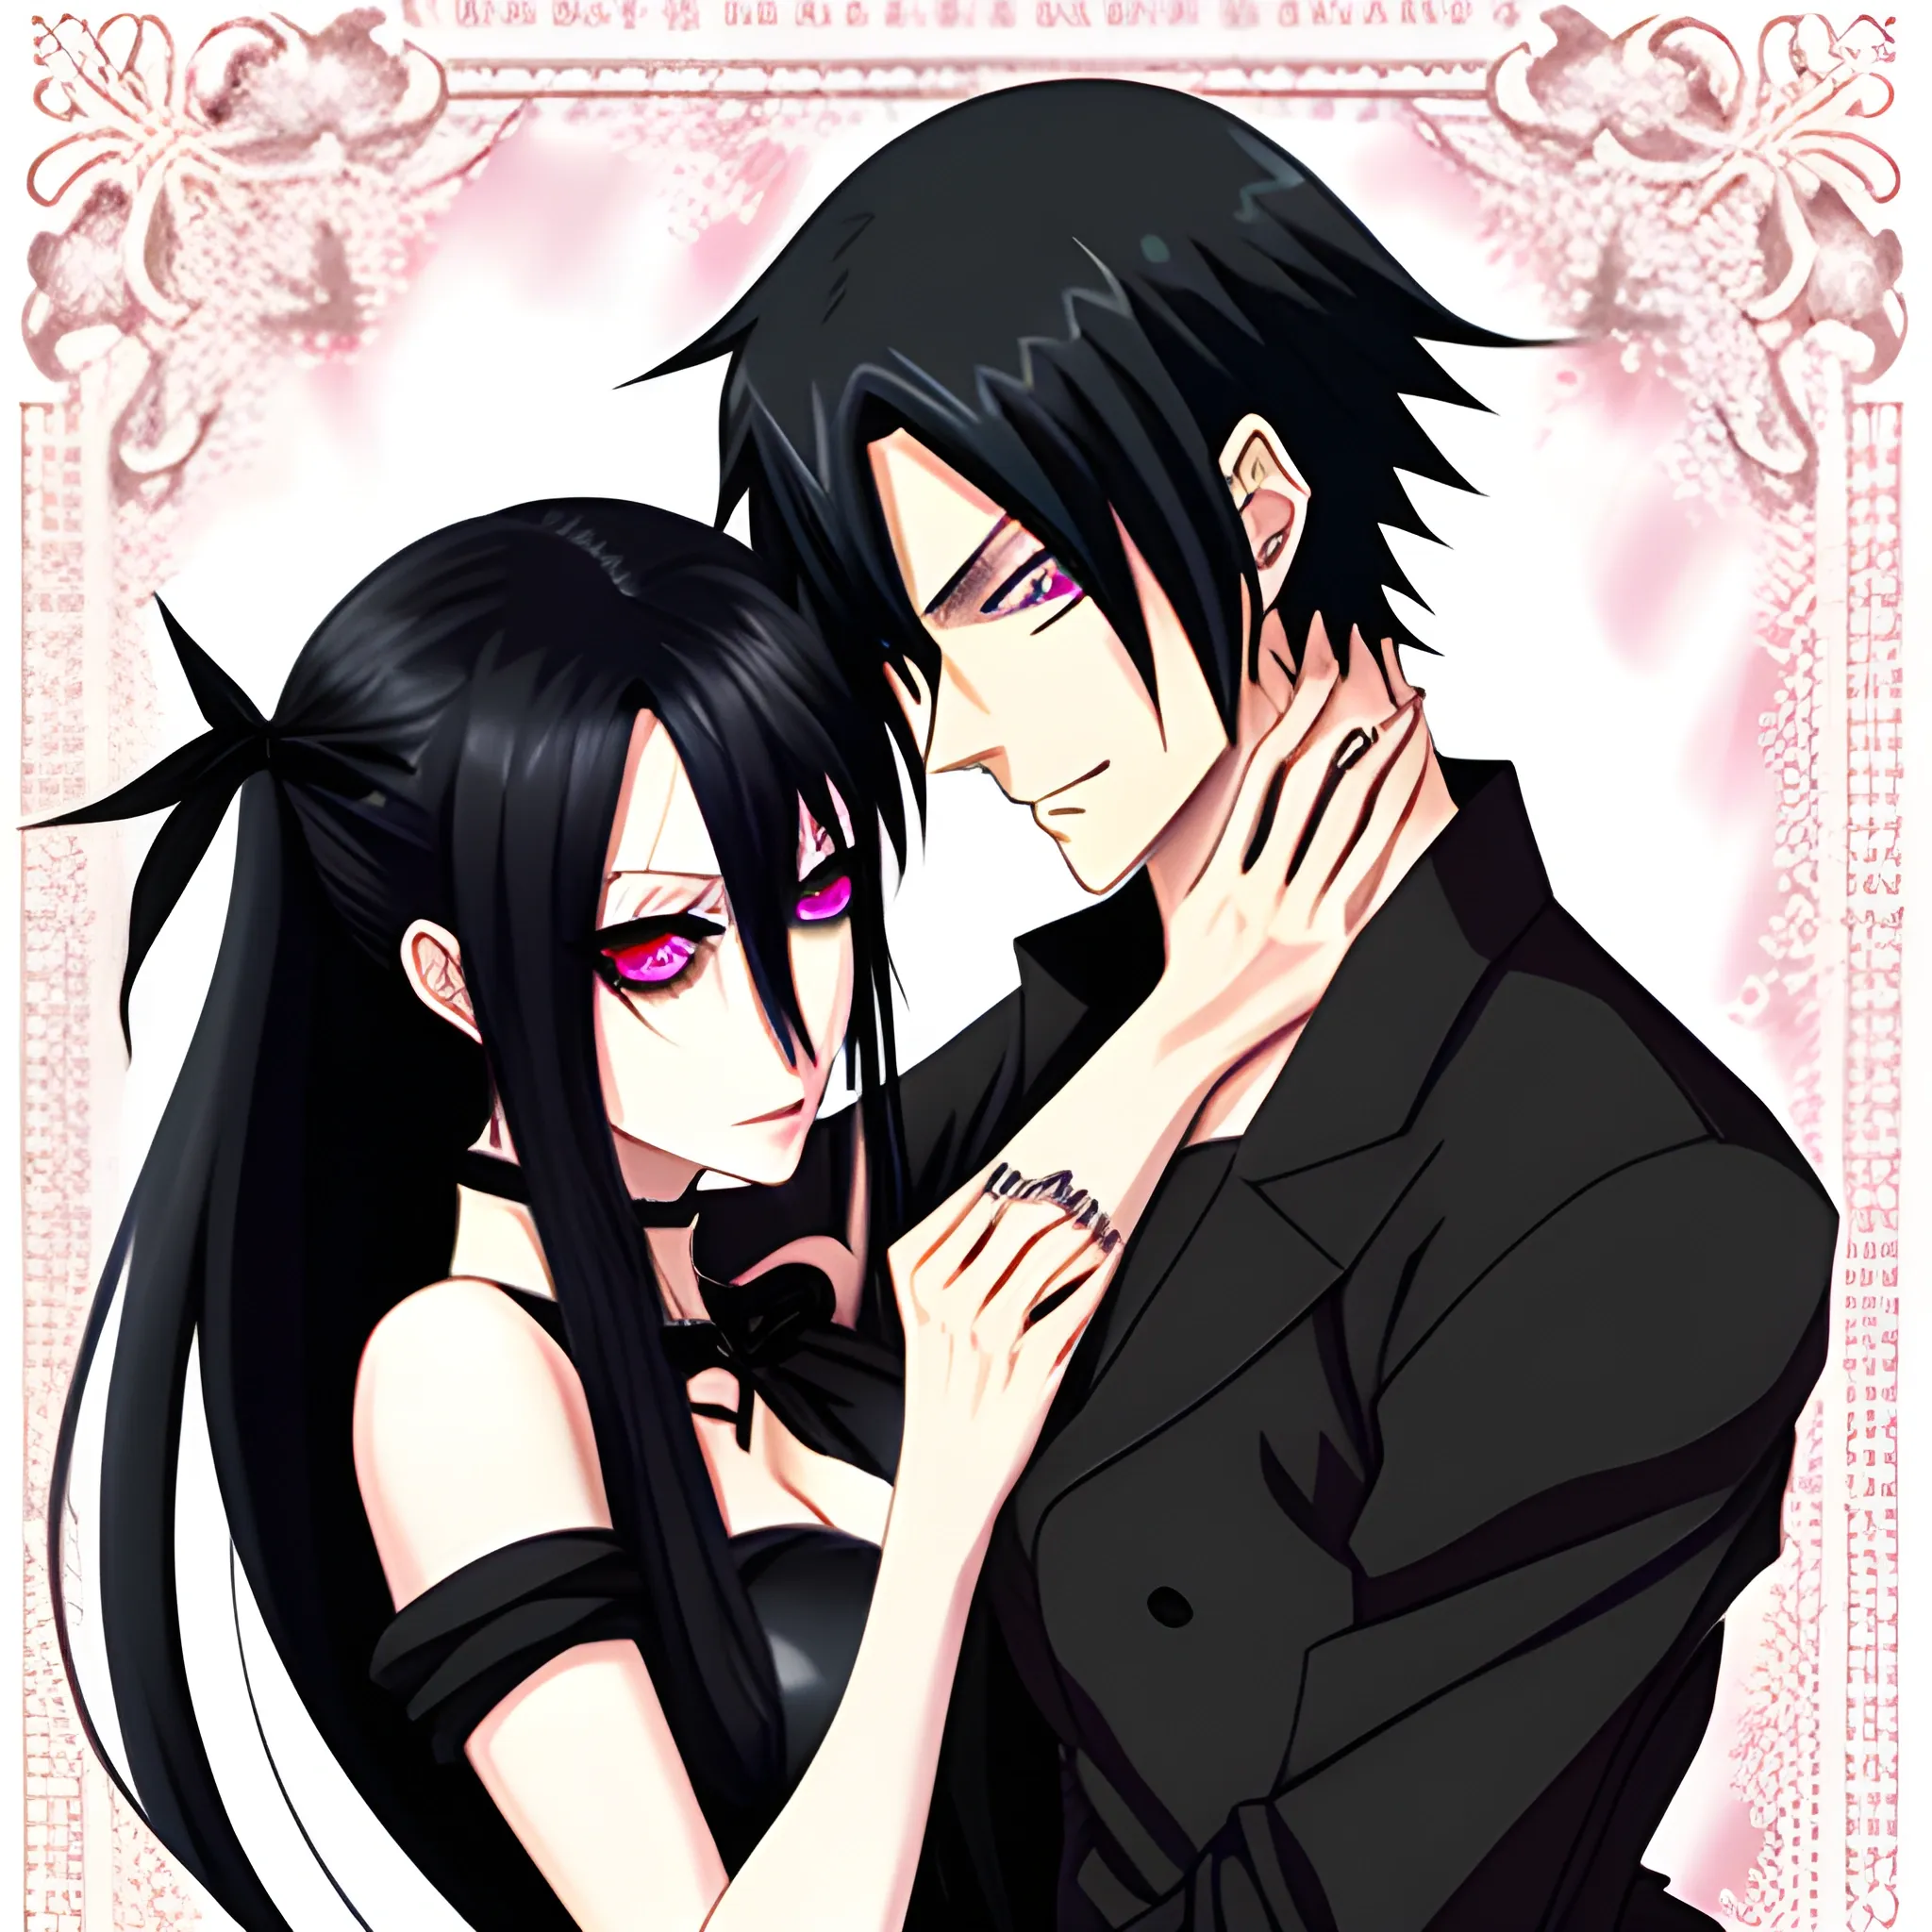 Anime-style illustration of a romantic hug on Craiyon